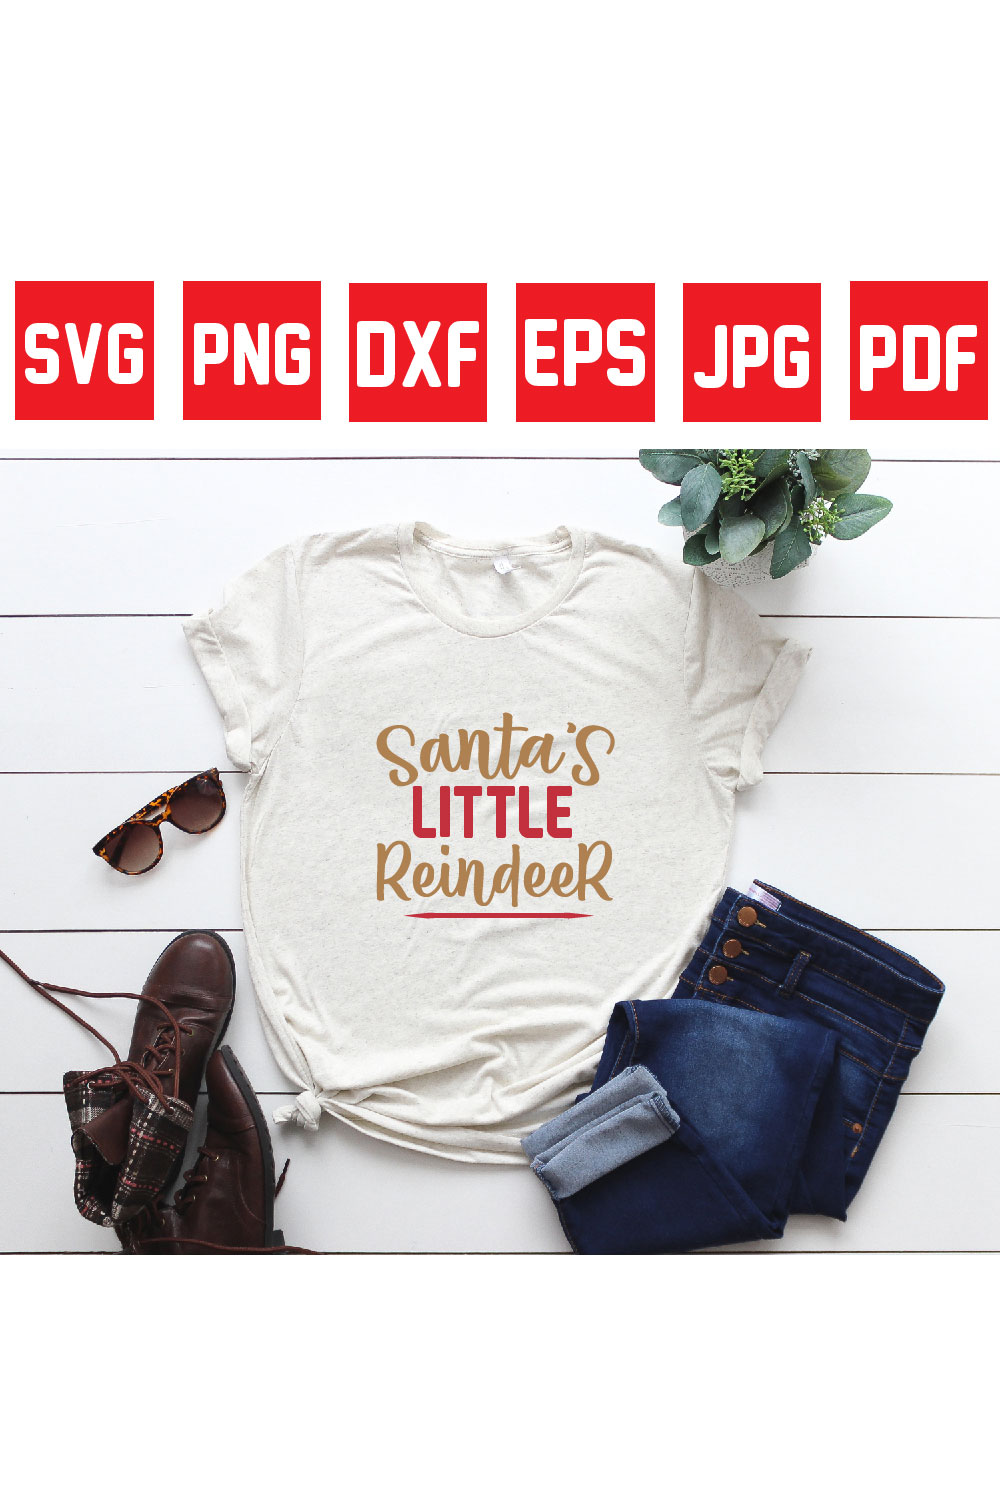 santa’s little reindeer pinterest preview image.